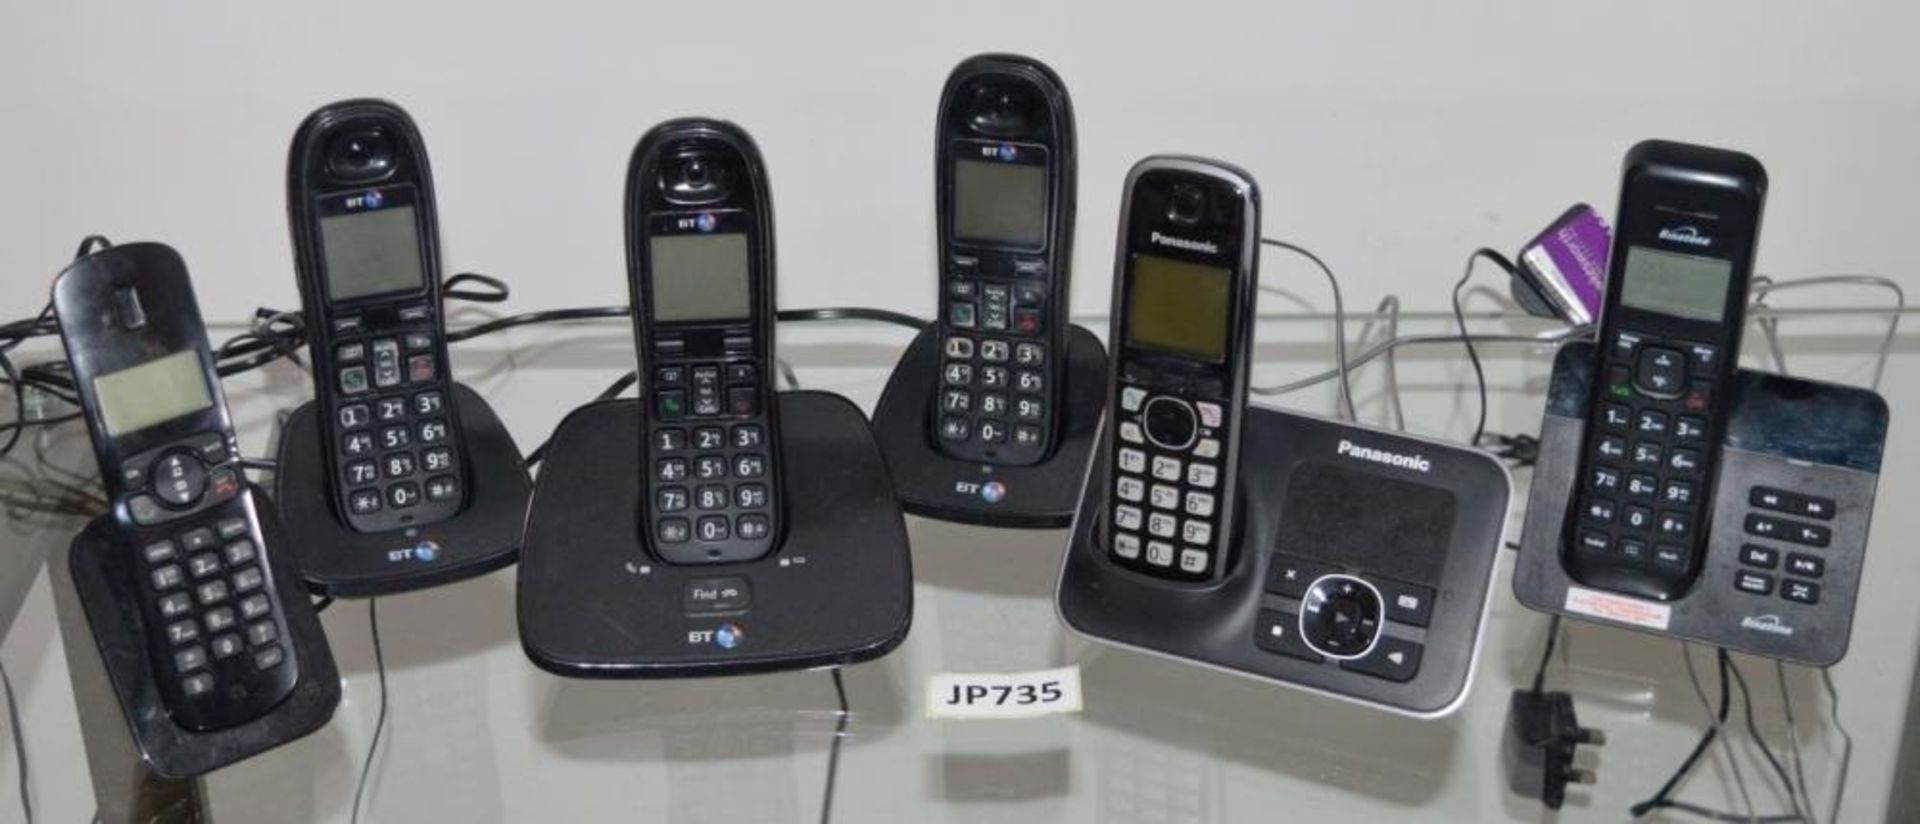 6 x Cordless Phone Handsets - Includes BT, Binatone and Panasonic Models - CL285 - Ref JP735 - Locat